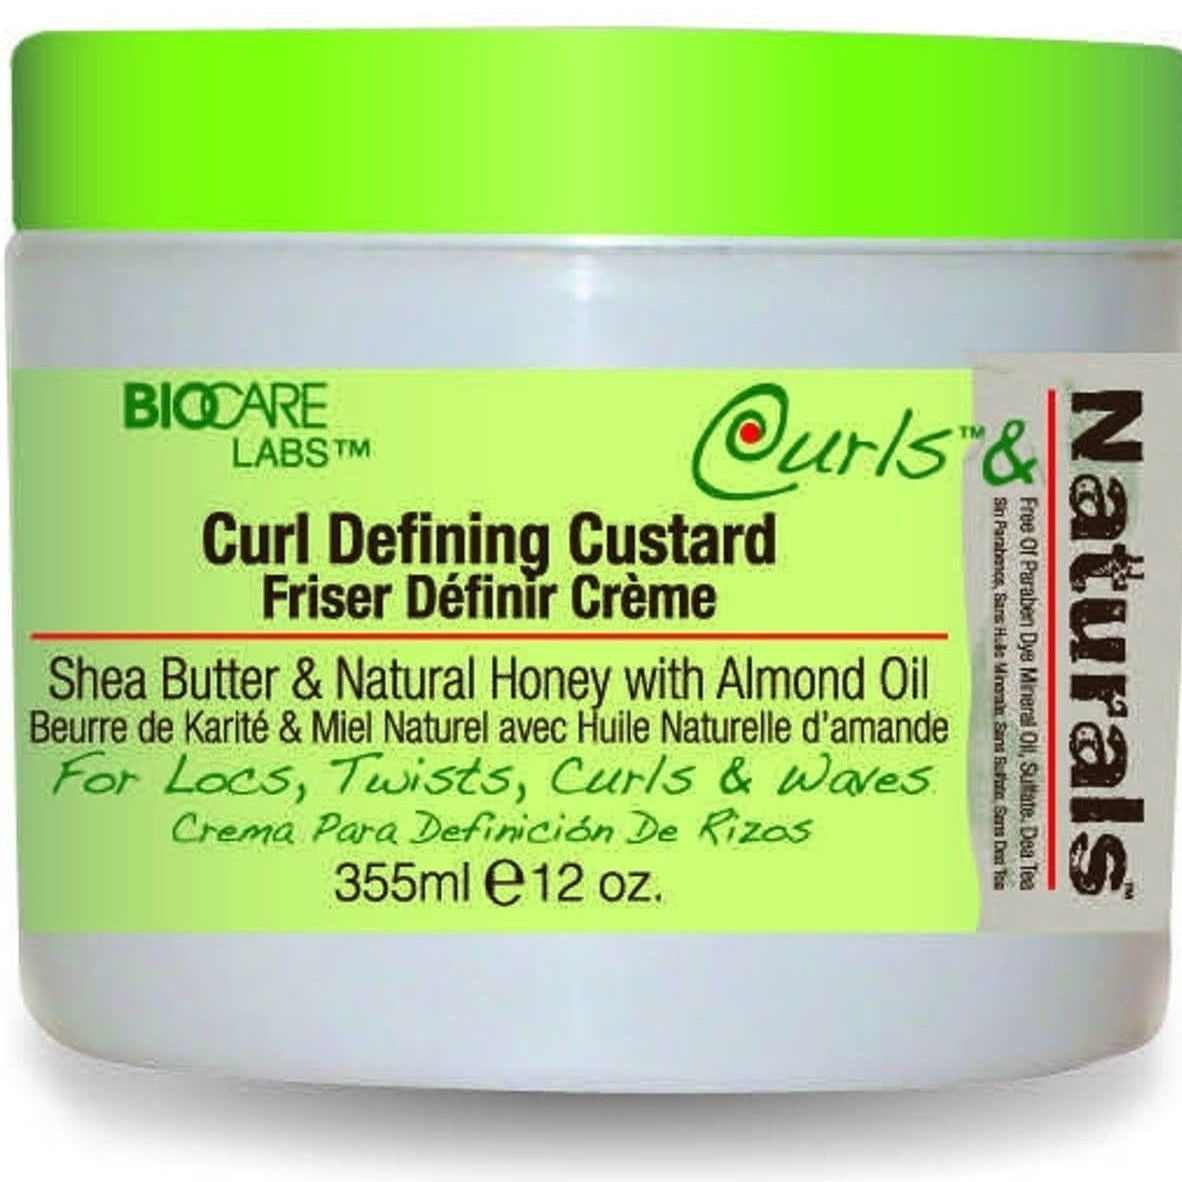 Biocare Curls & Naturals Curl Defining Custard 12oz